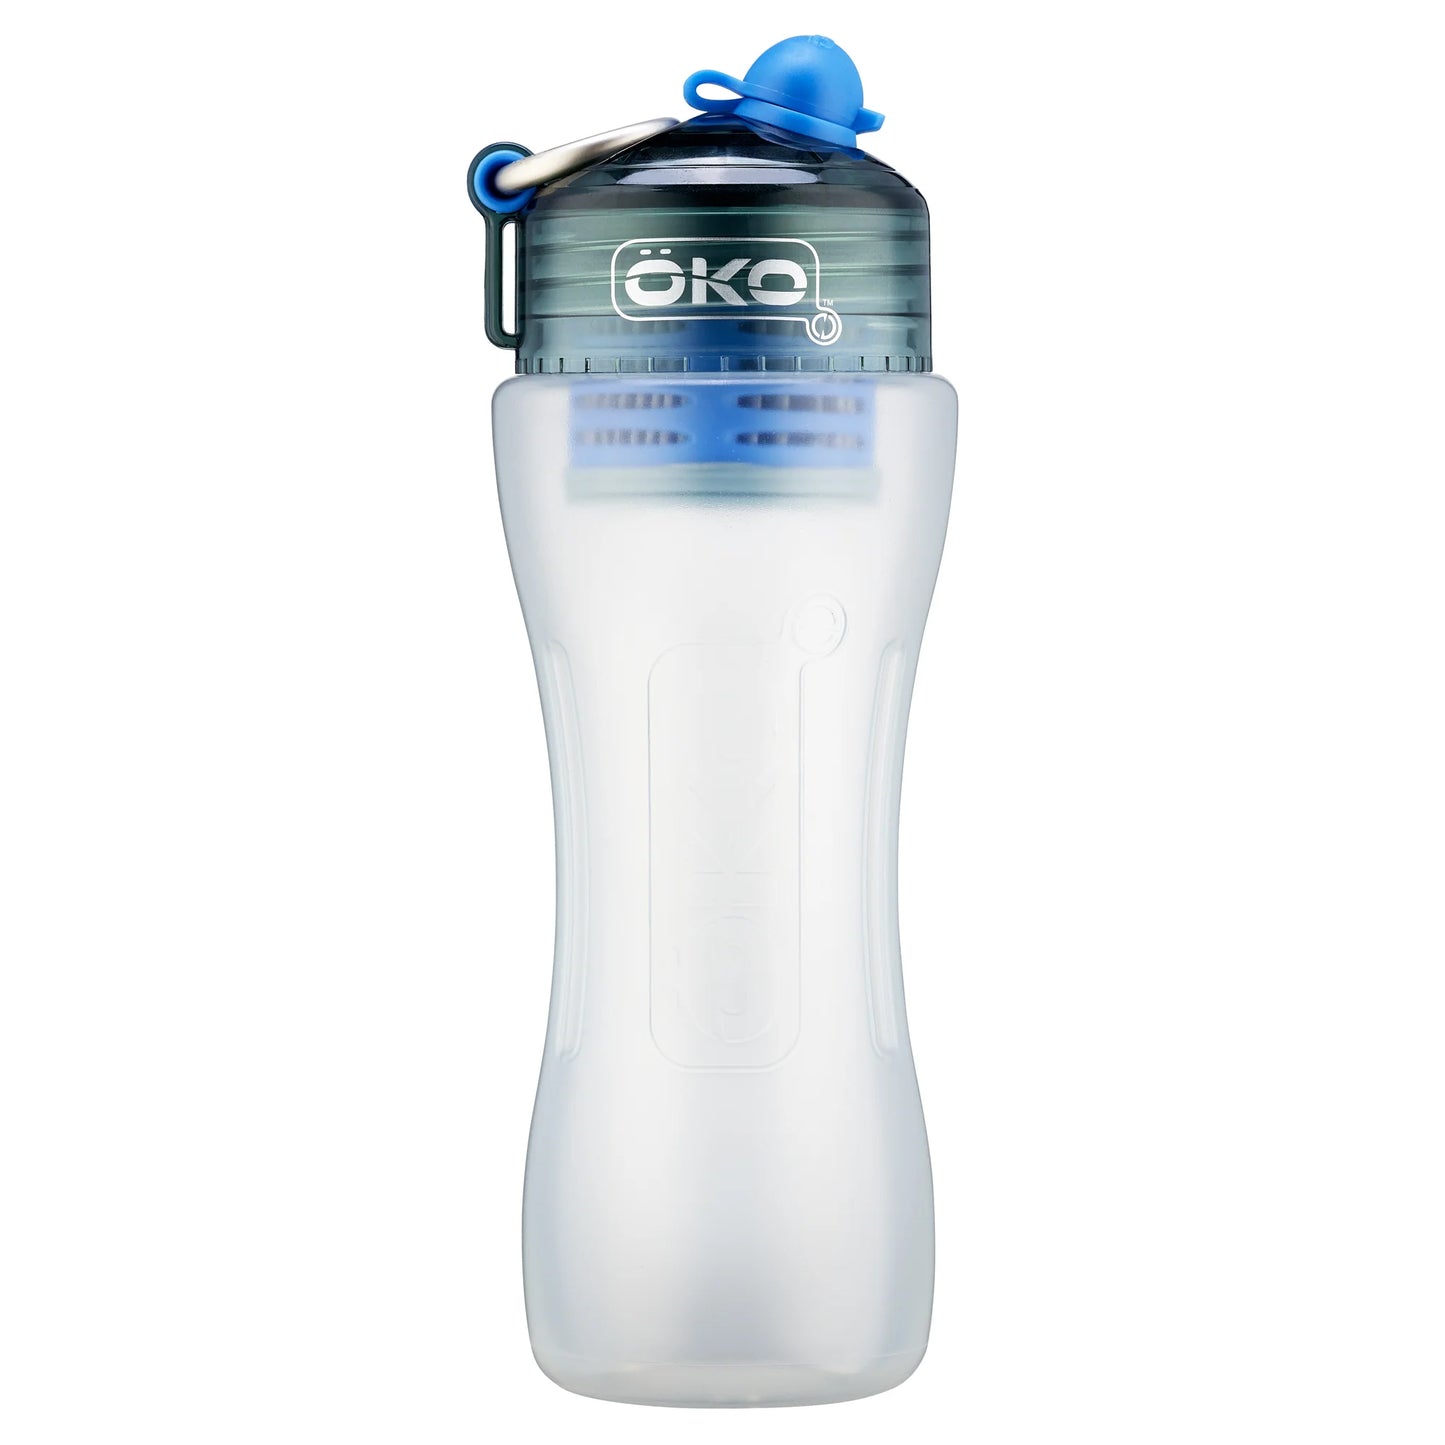 OKO - Filtered Water Bottle